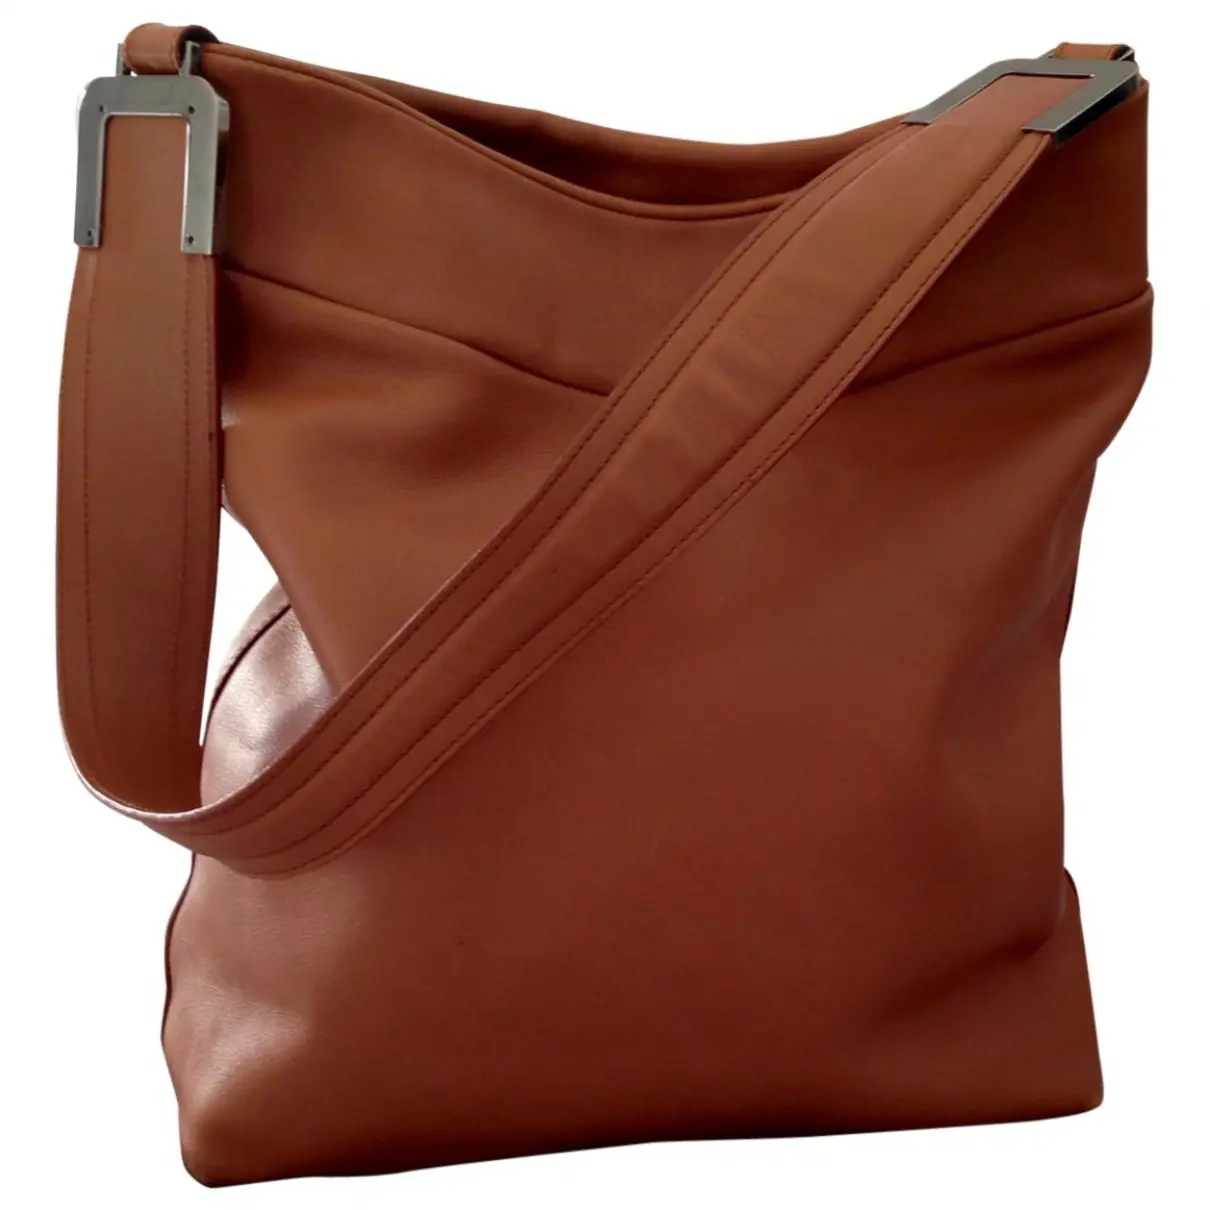 Leather handbag Sergio Rossi